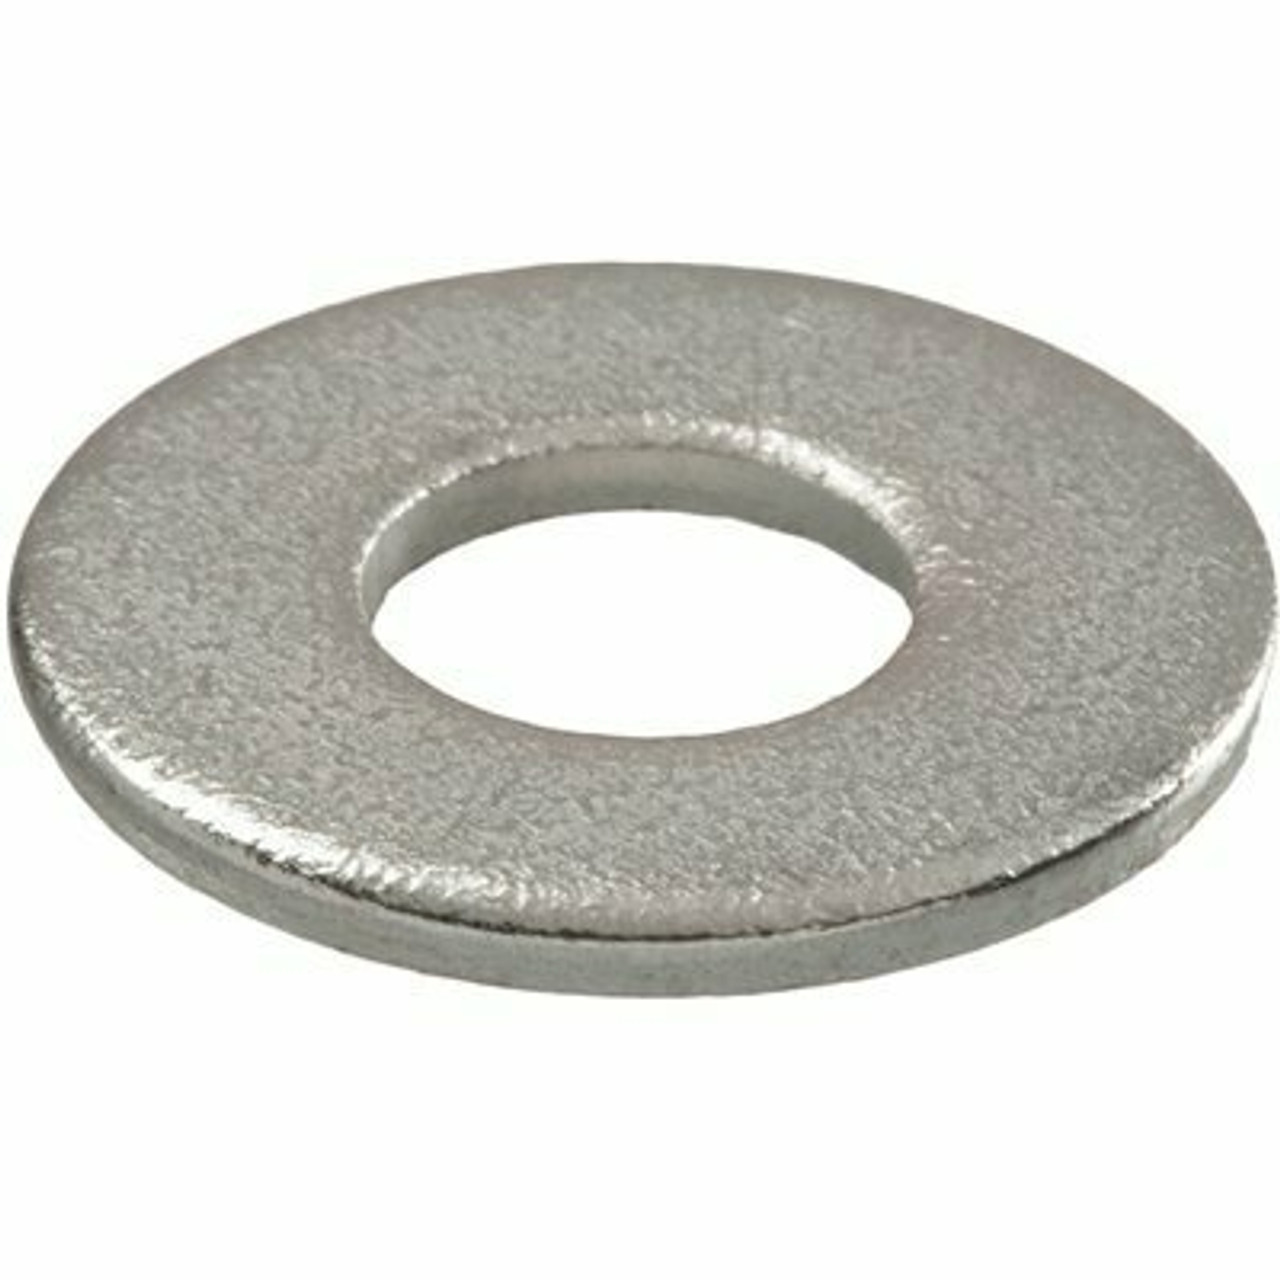 Everbilt 1/4 In. Zinc Flat Washer (100-Pack) - 3584115